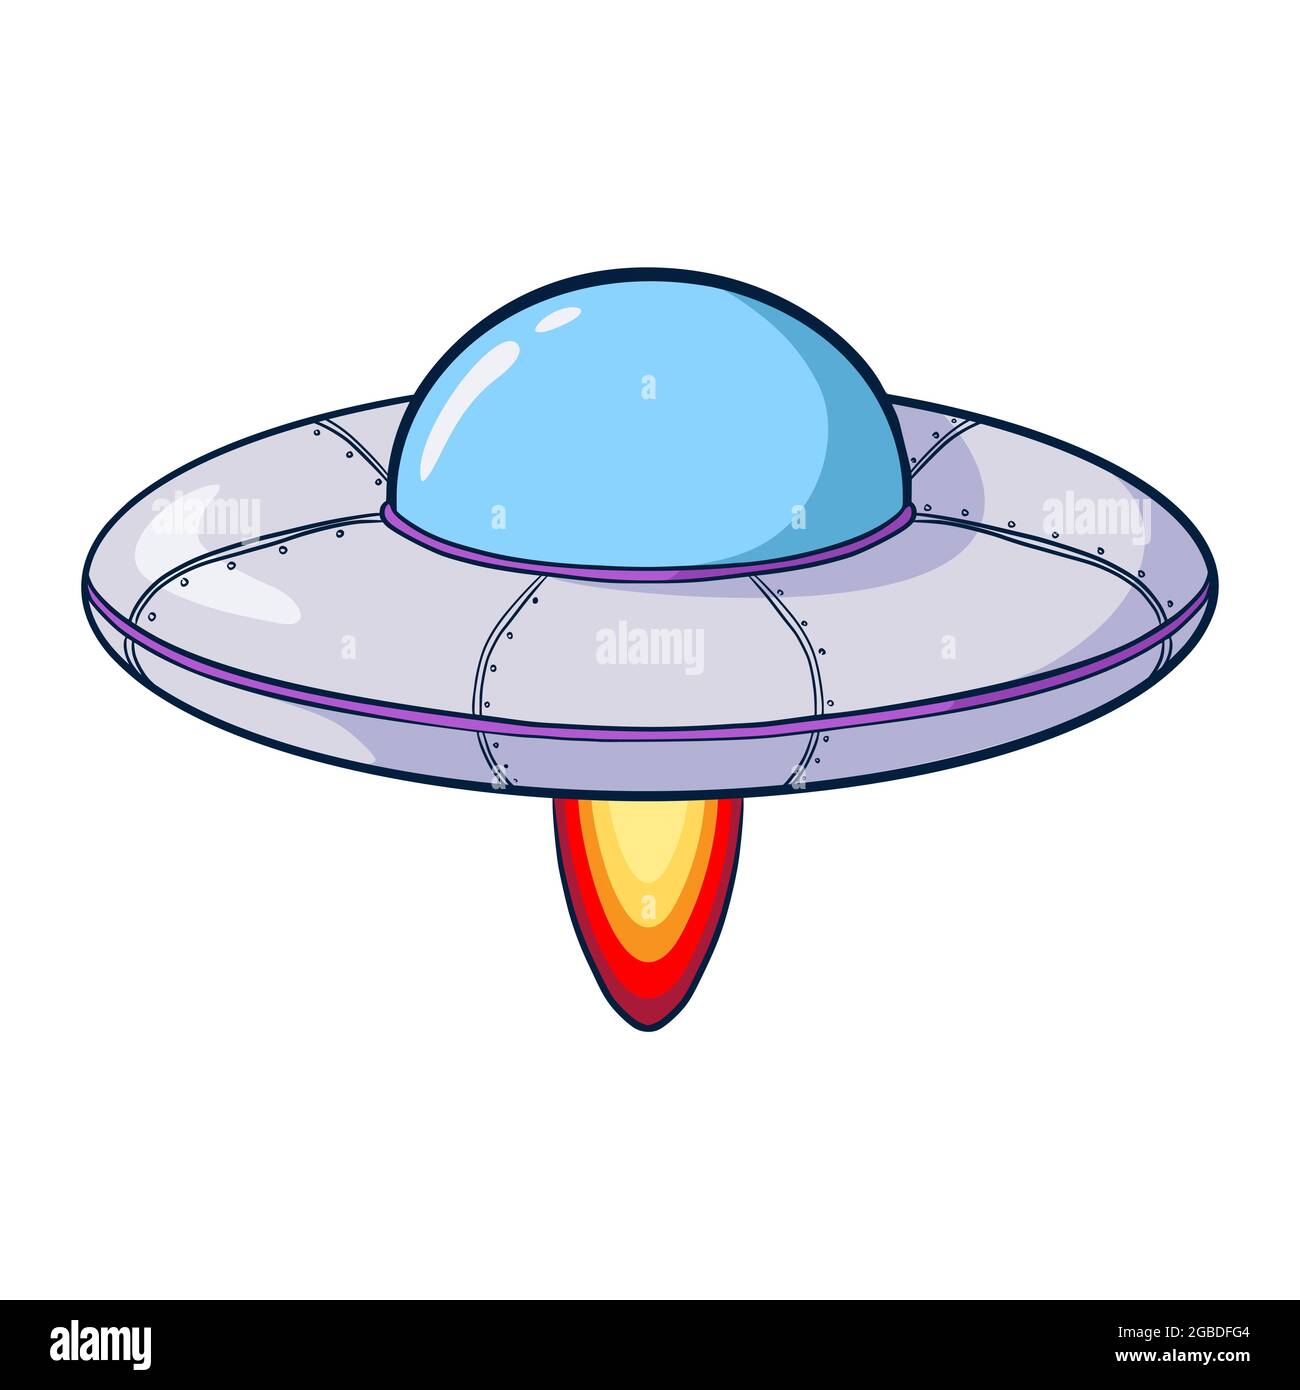 Flying Saucer Cartoon Illustration. Hand drawn spacecraft icon for logo, emblem, Web design, nursery decor, Print, Sticker, Card Stock Vector